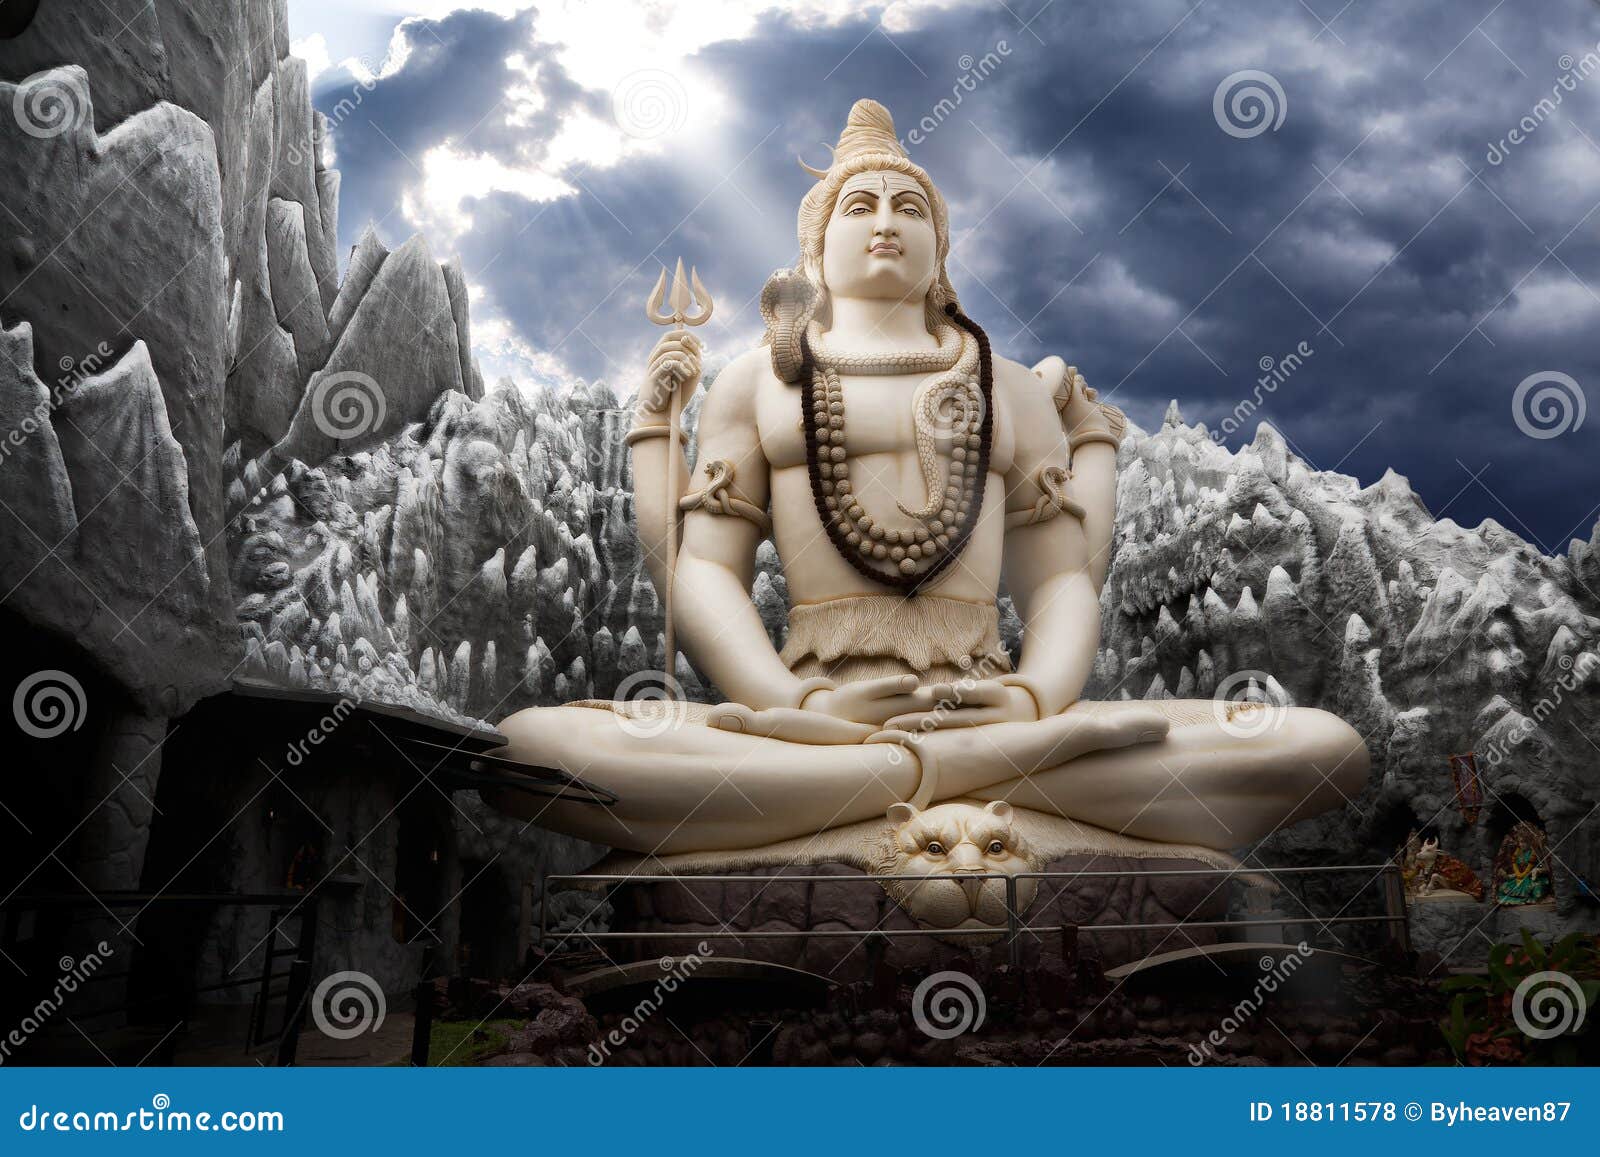 big lord shiva statue in bangalore